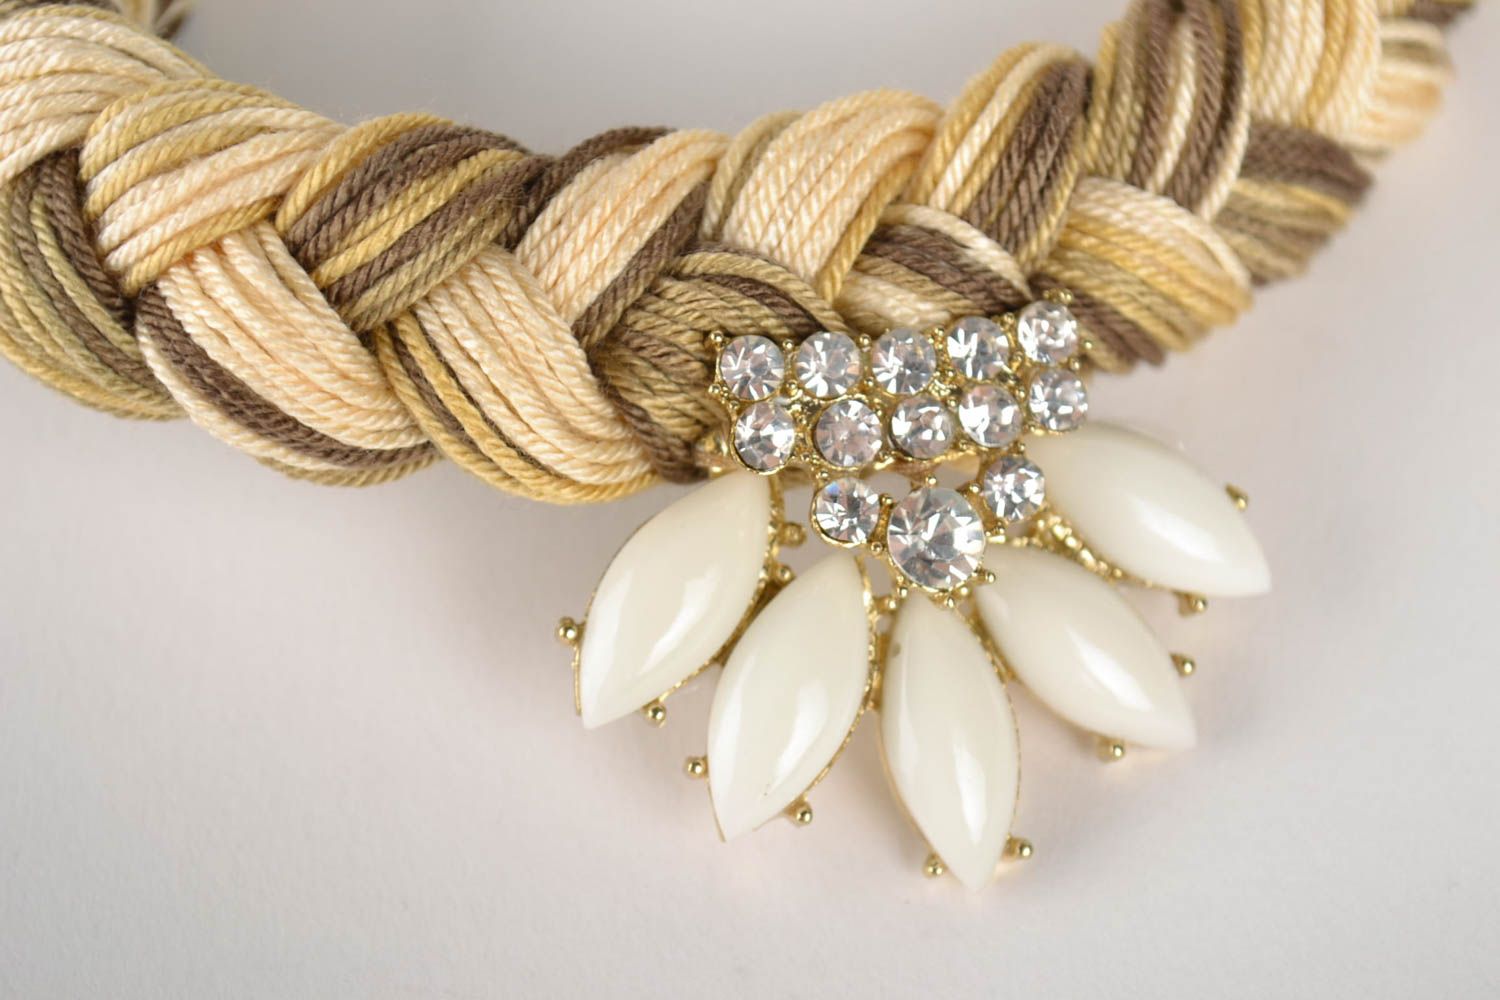 Handmade bijouterie necklace designer woman accessories made of threads photo 2